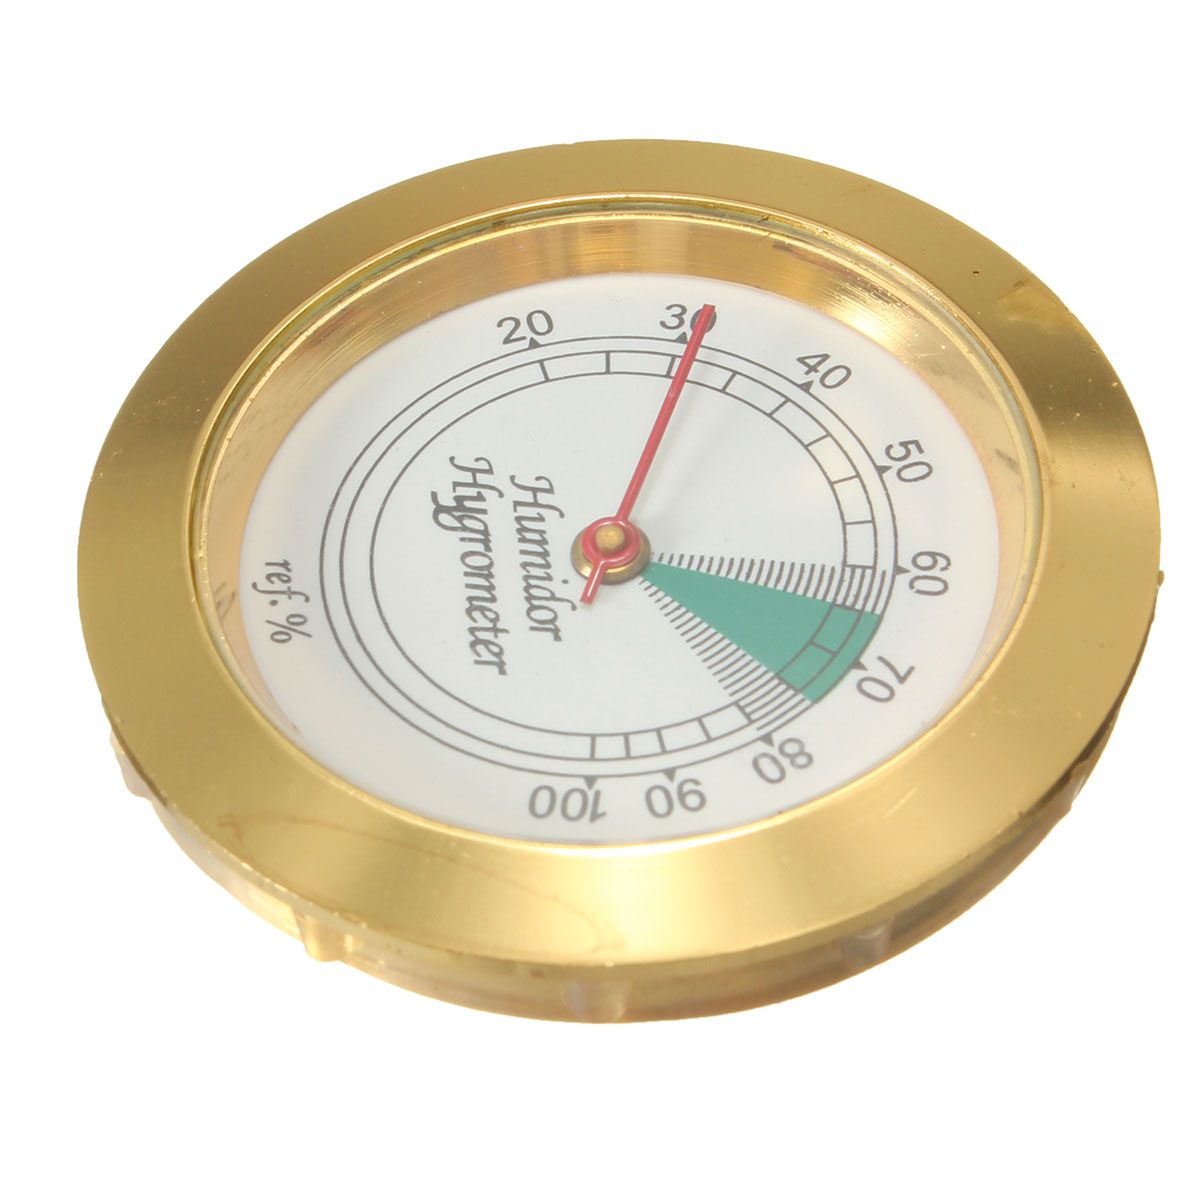 43mm-Diameter-Precision-Analog-Hygrometer-Moisture-Meter-For-Tobacco-Cigar-Humidor-992855